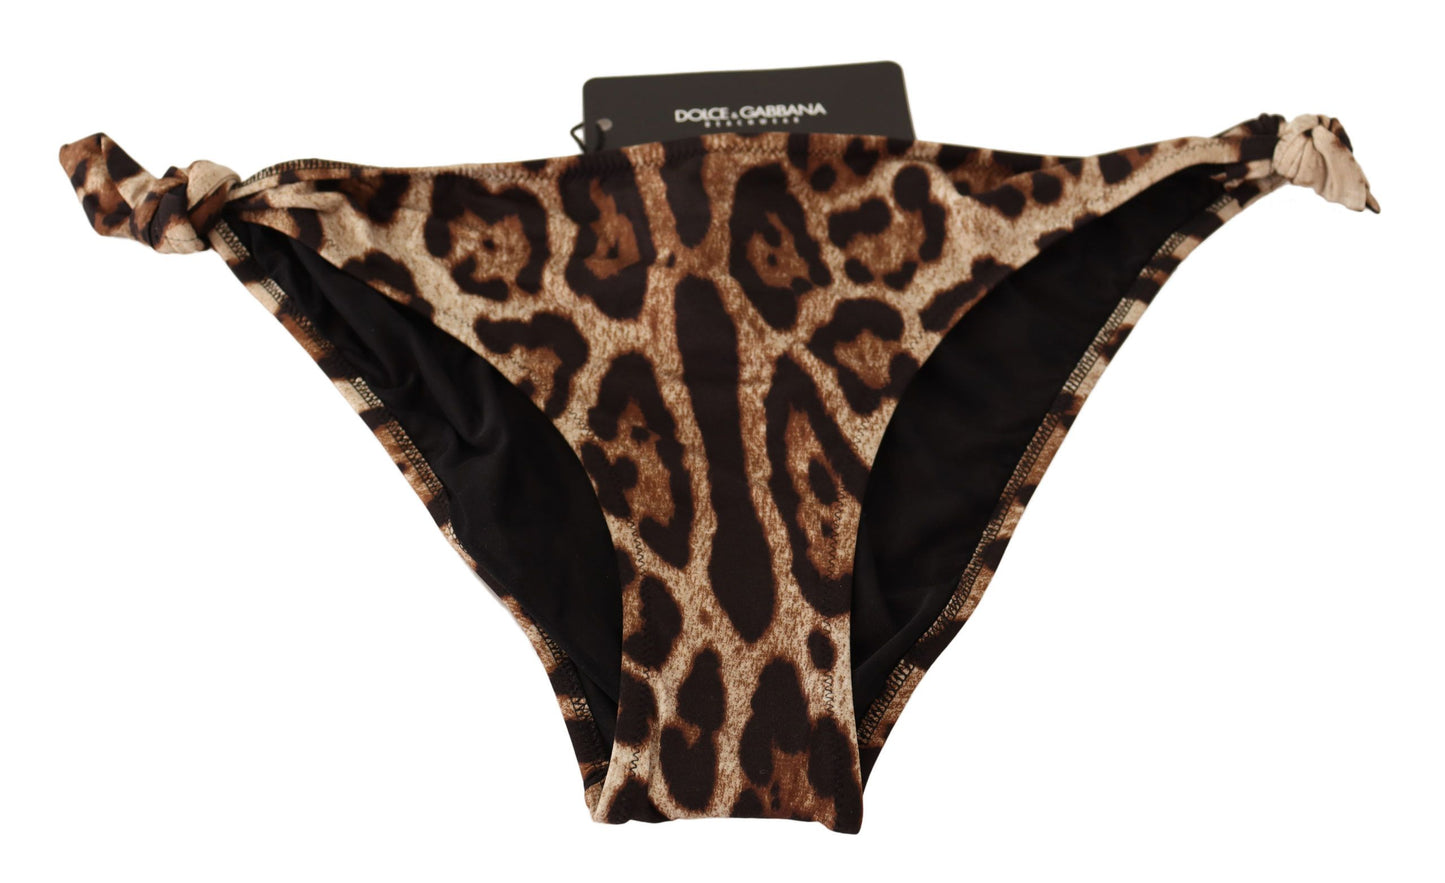 Dolce & Gabbana Bikini Bottom Brown Leopard Print Badeanzug Badebekleidung